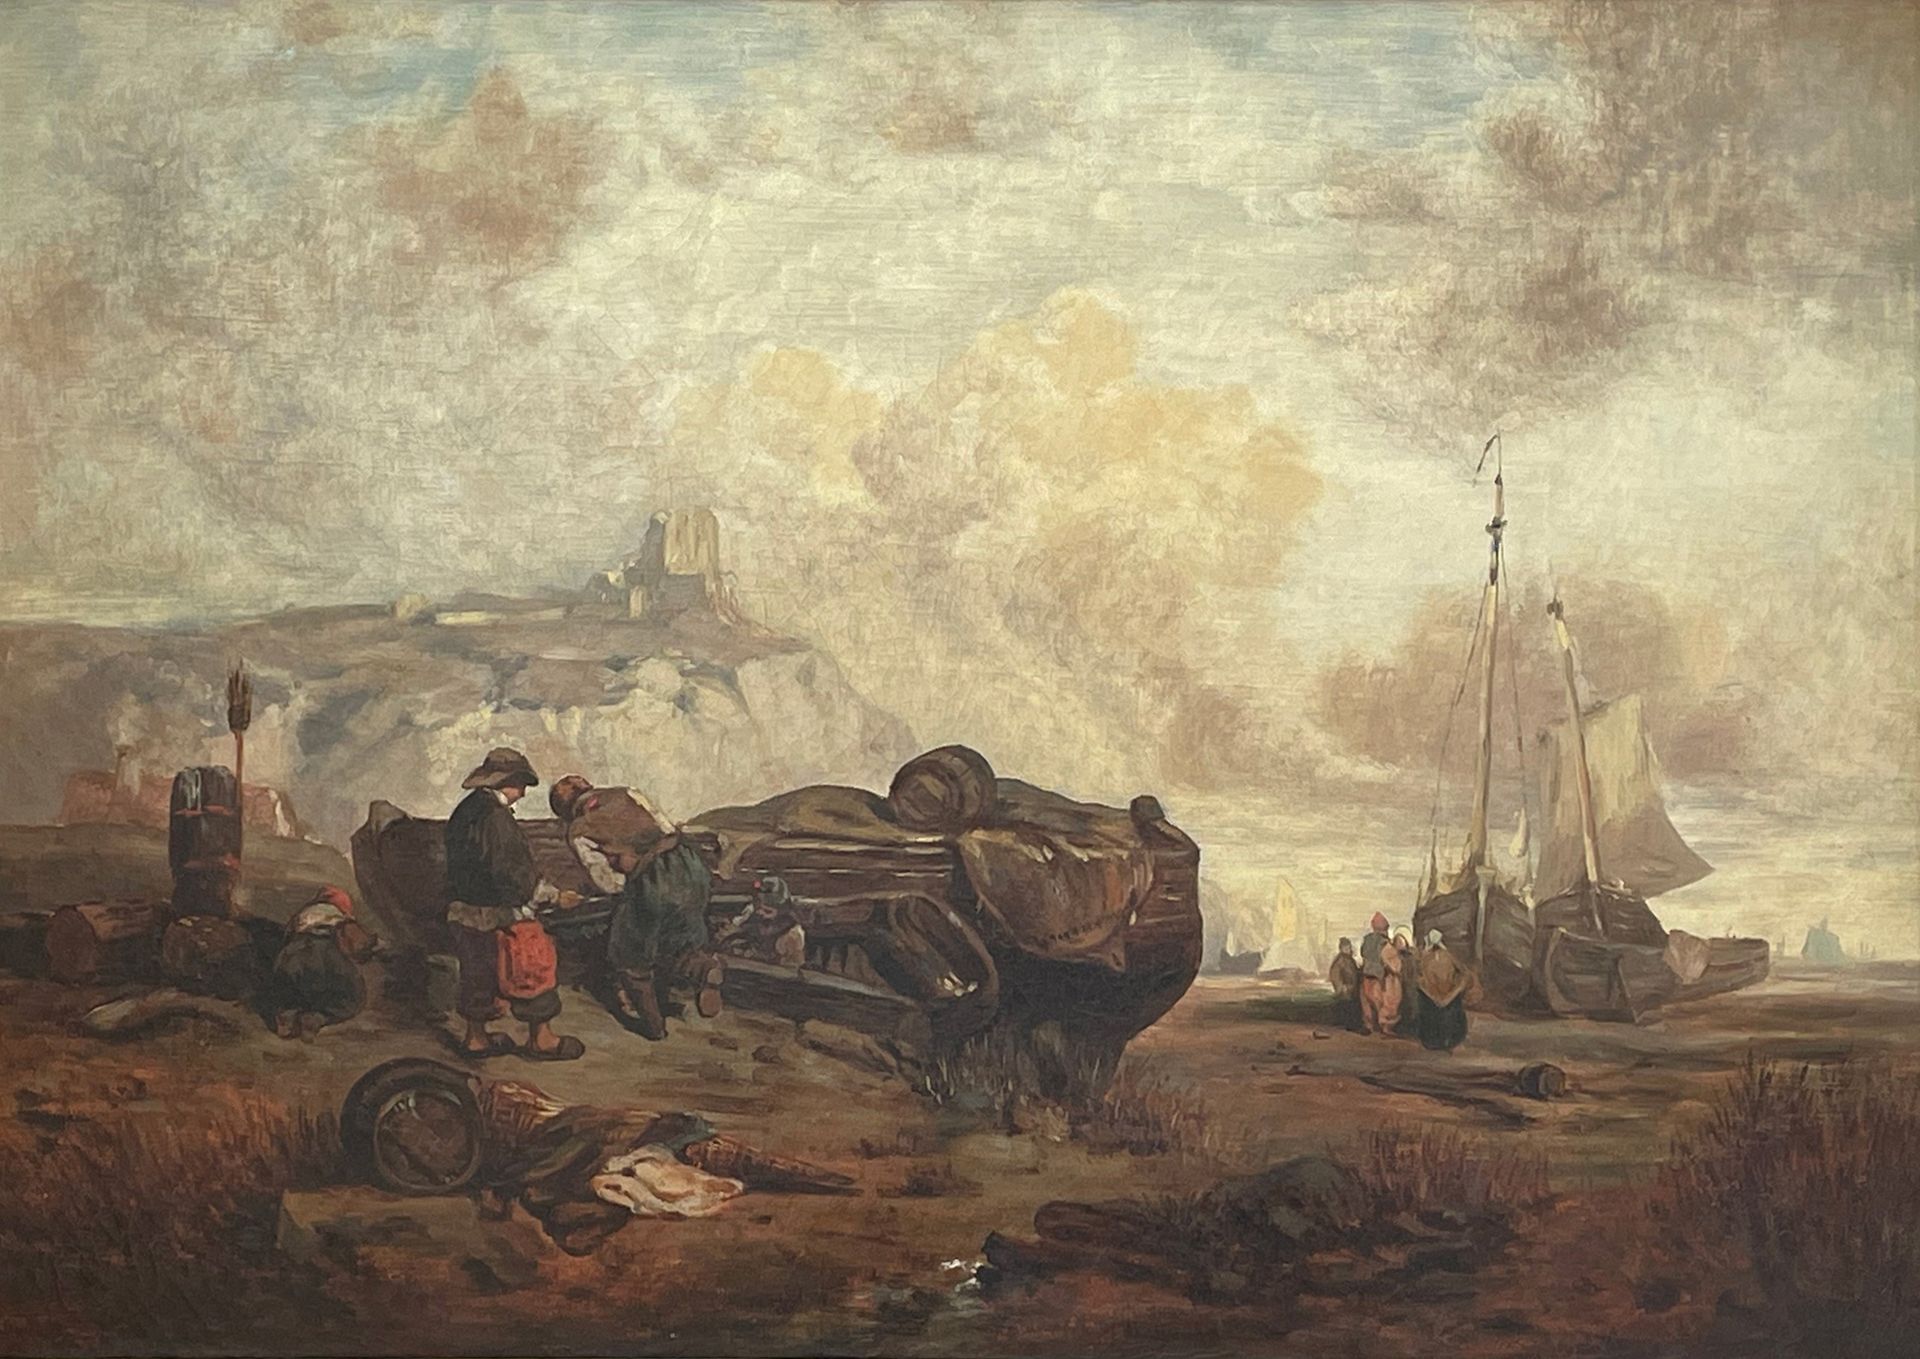 École du Nord, XIXe siècle 
Caulking scene on the riverbank
Oil on canvas
39 x 5&hellip;